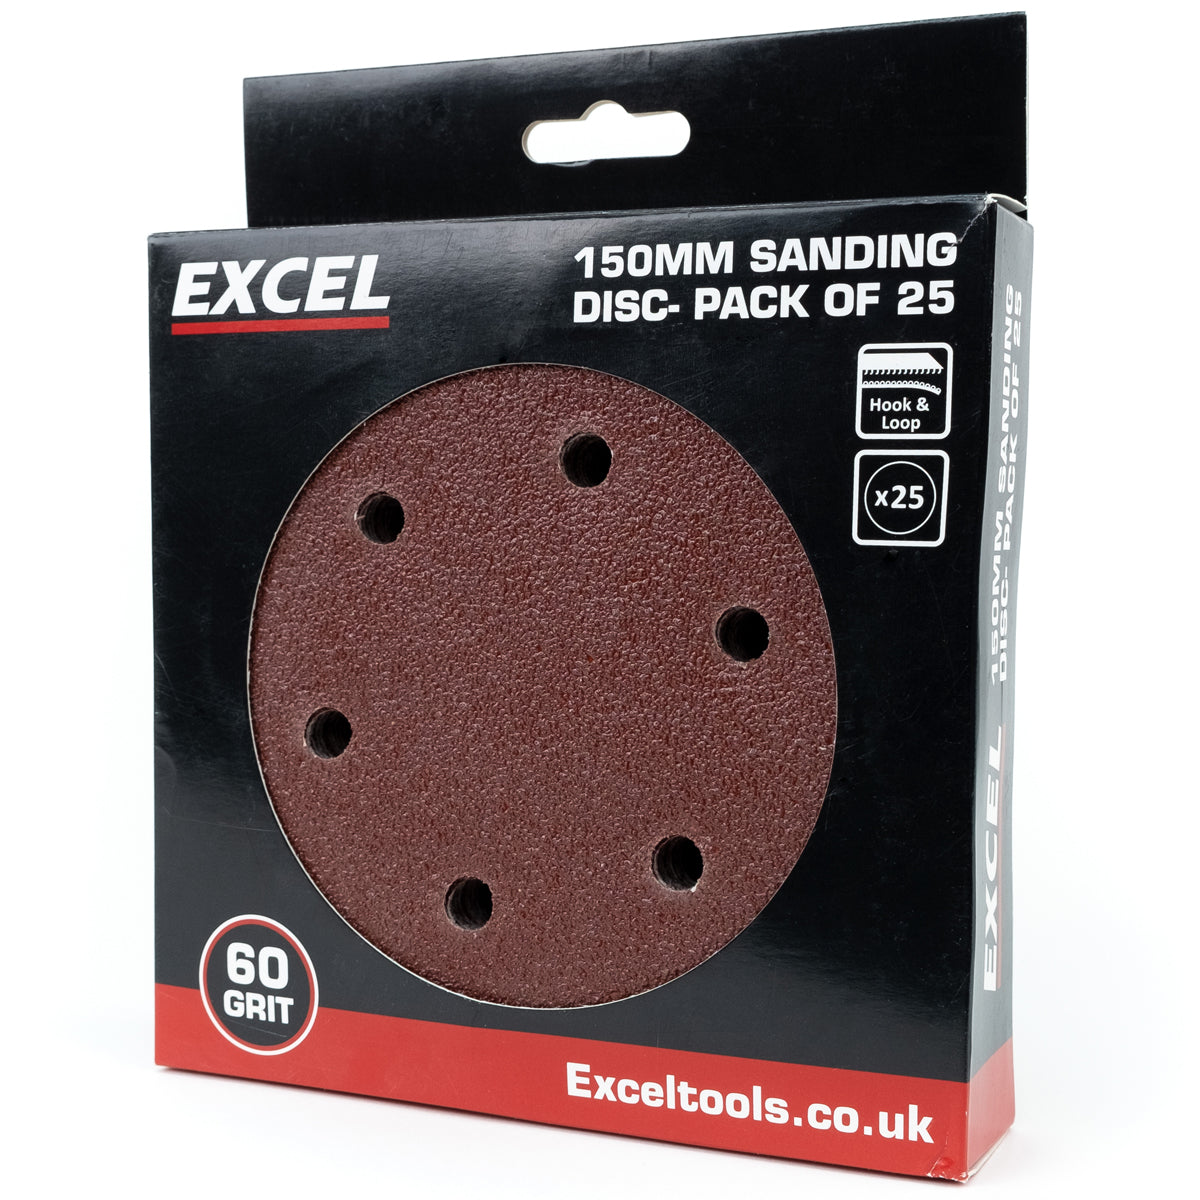 Excel 150mm Sanding Disc 60G Pack of 25